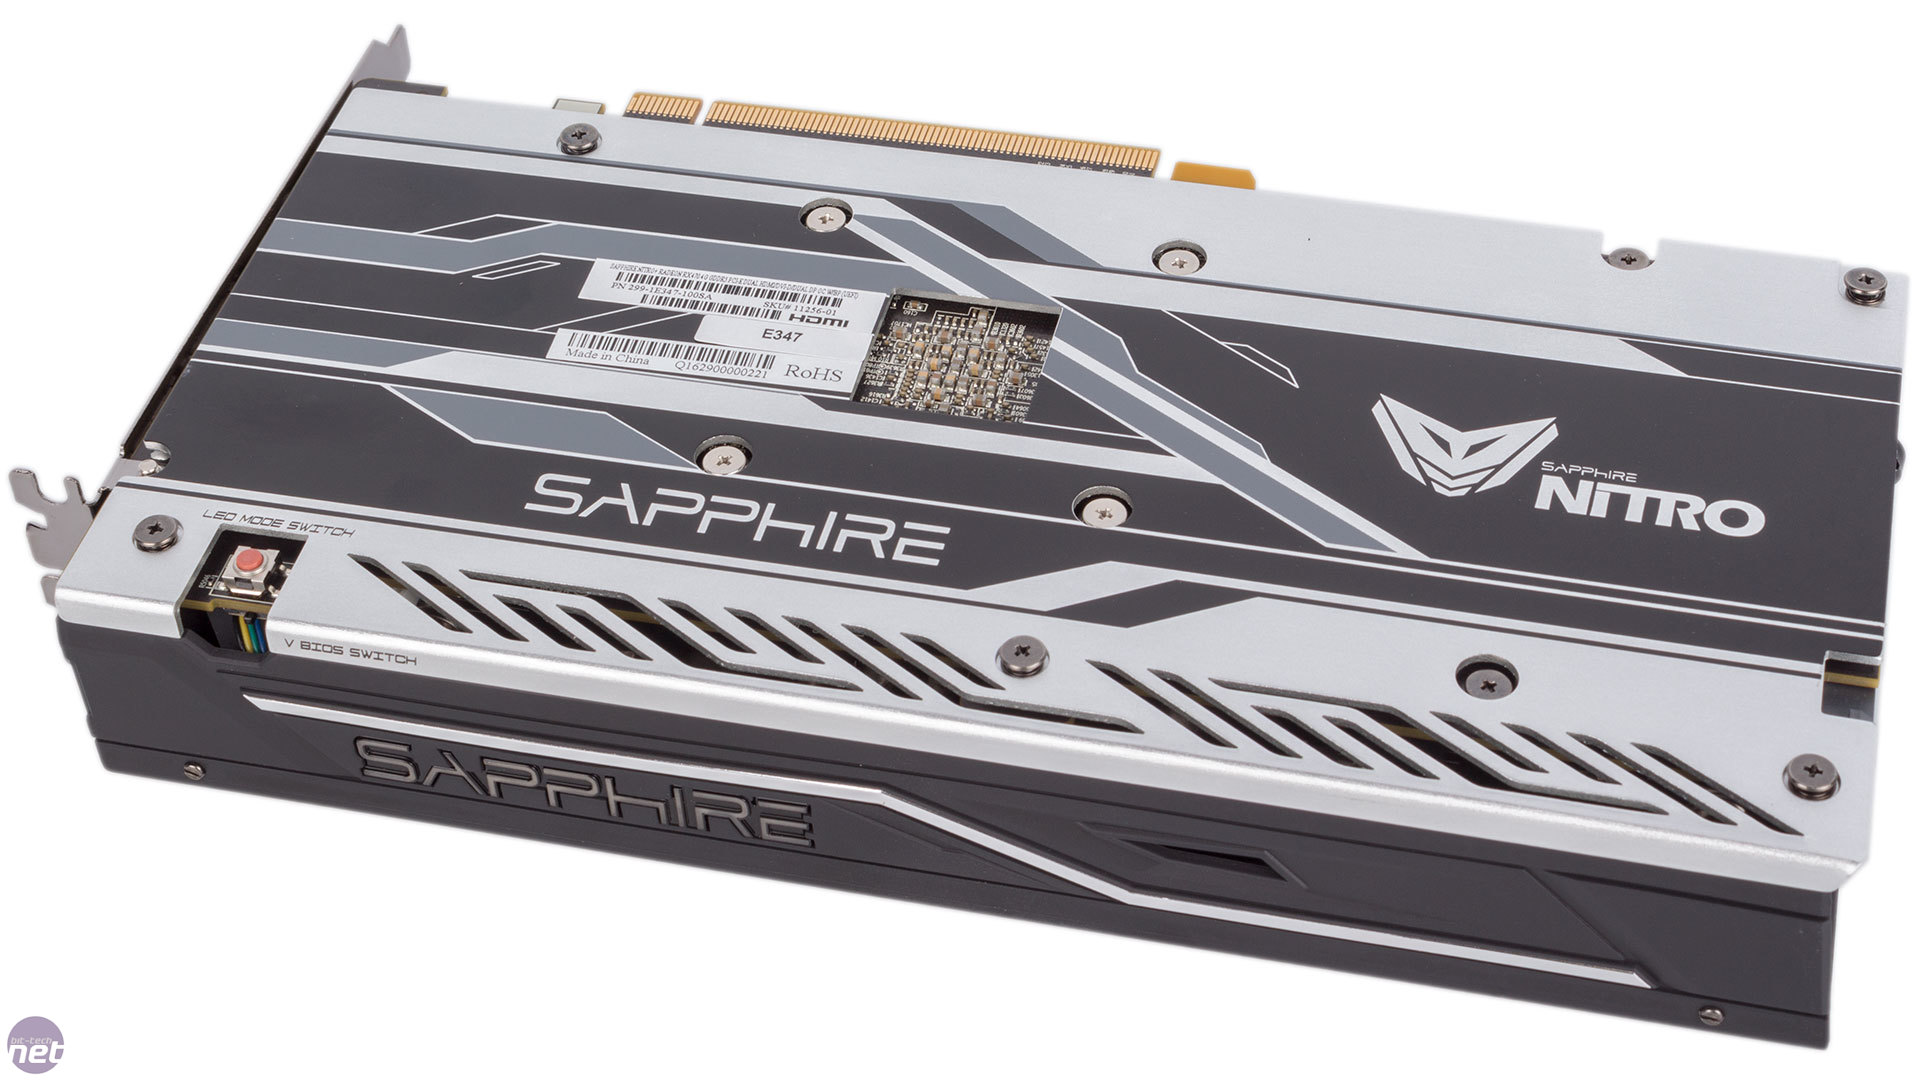 AMD Radeon RX470 Sapphire nitro 4gb